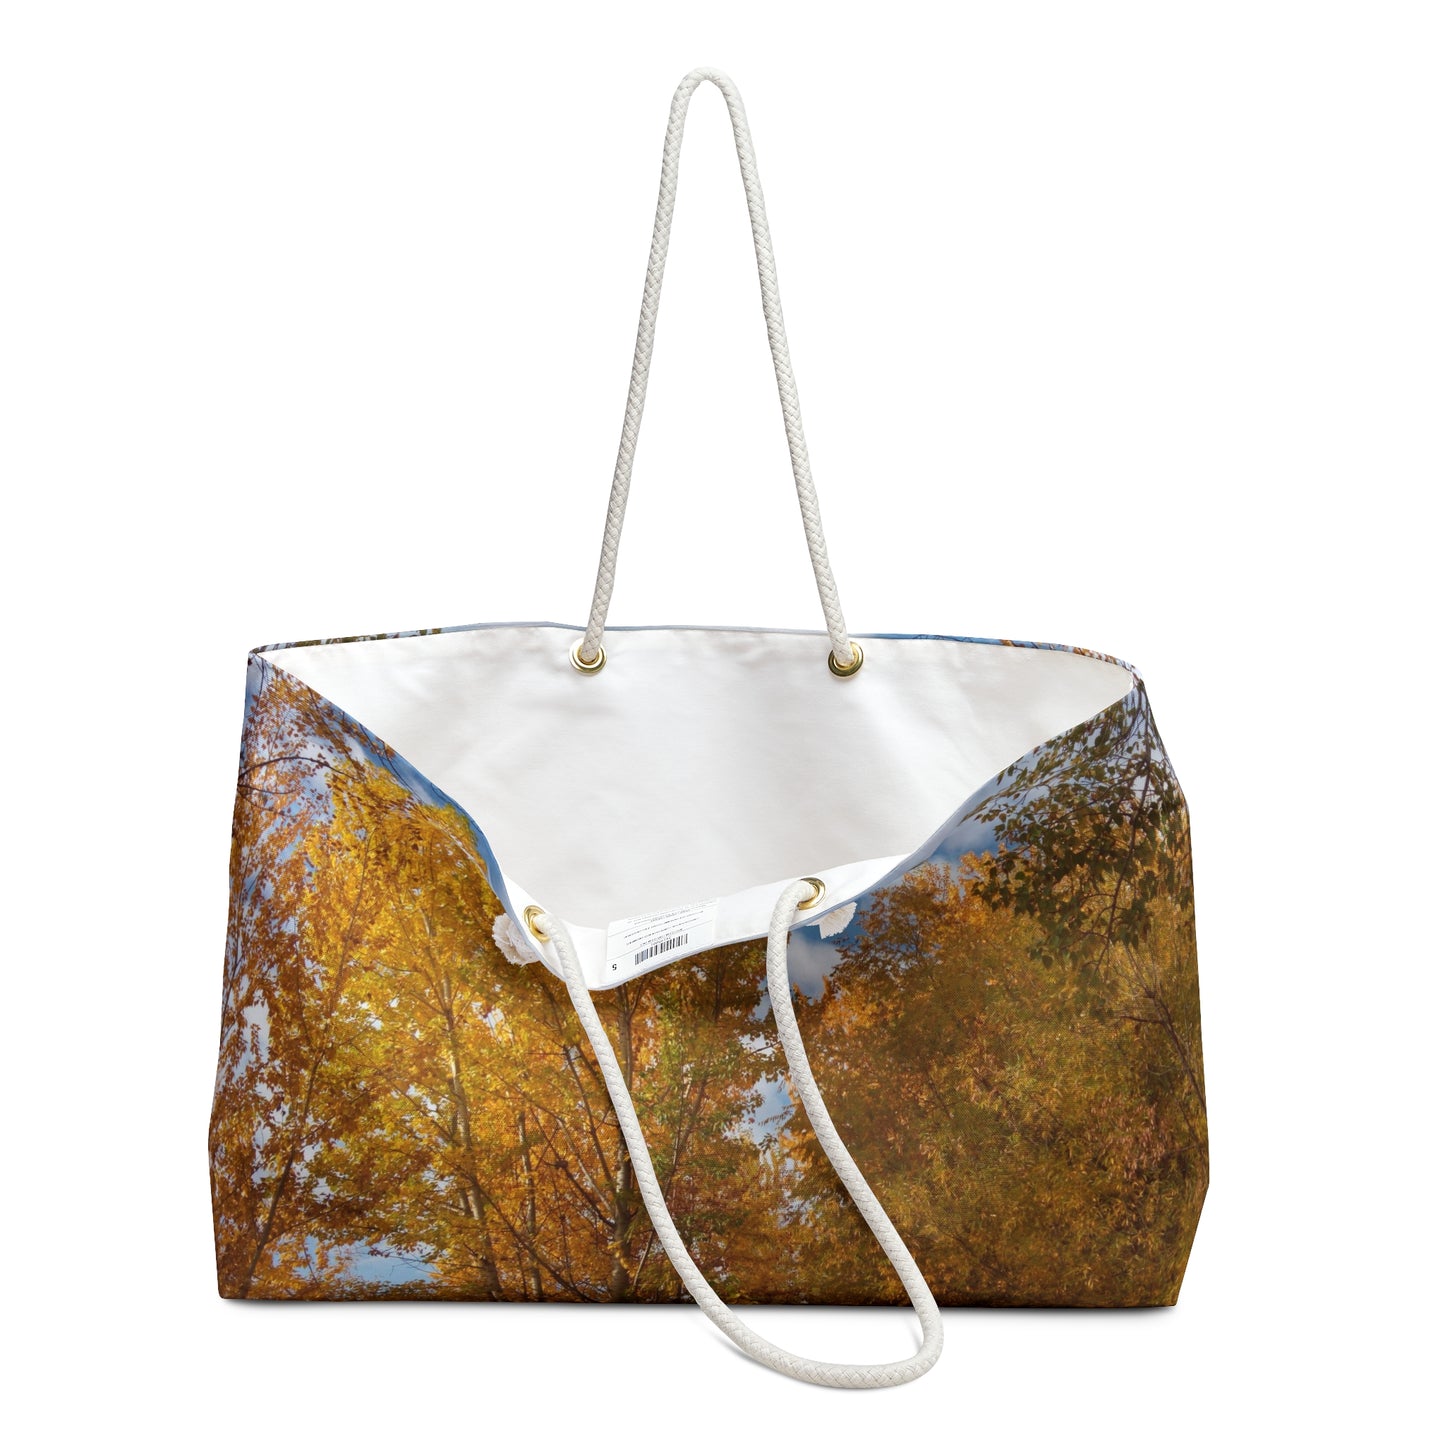 Autumn Gold Weekender Bag